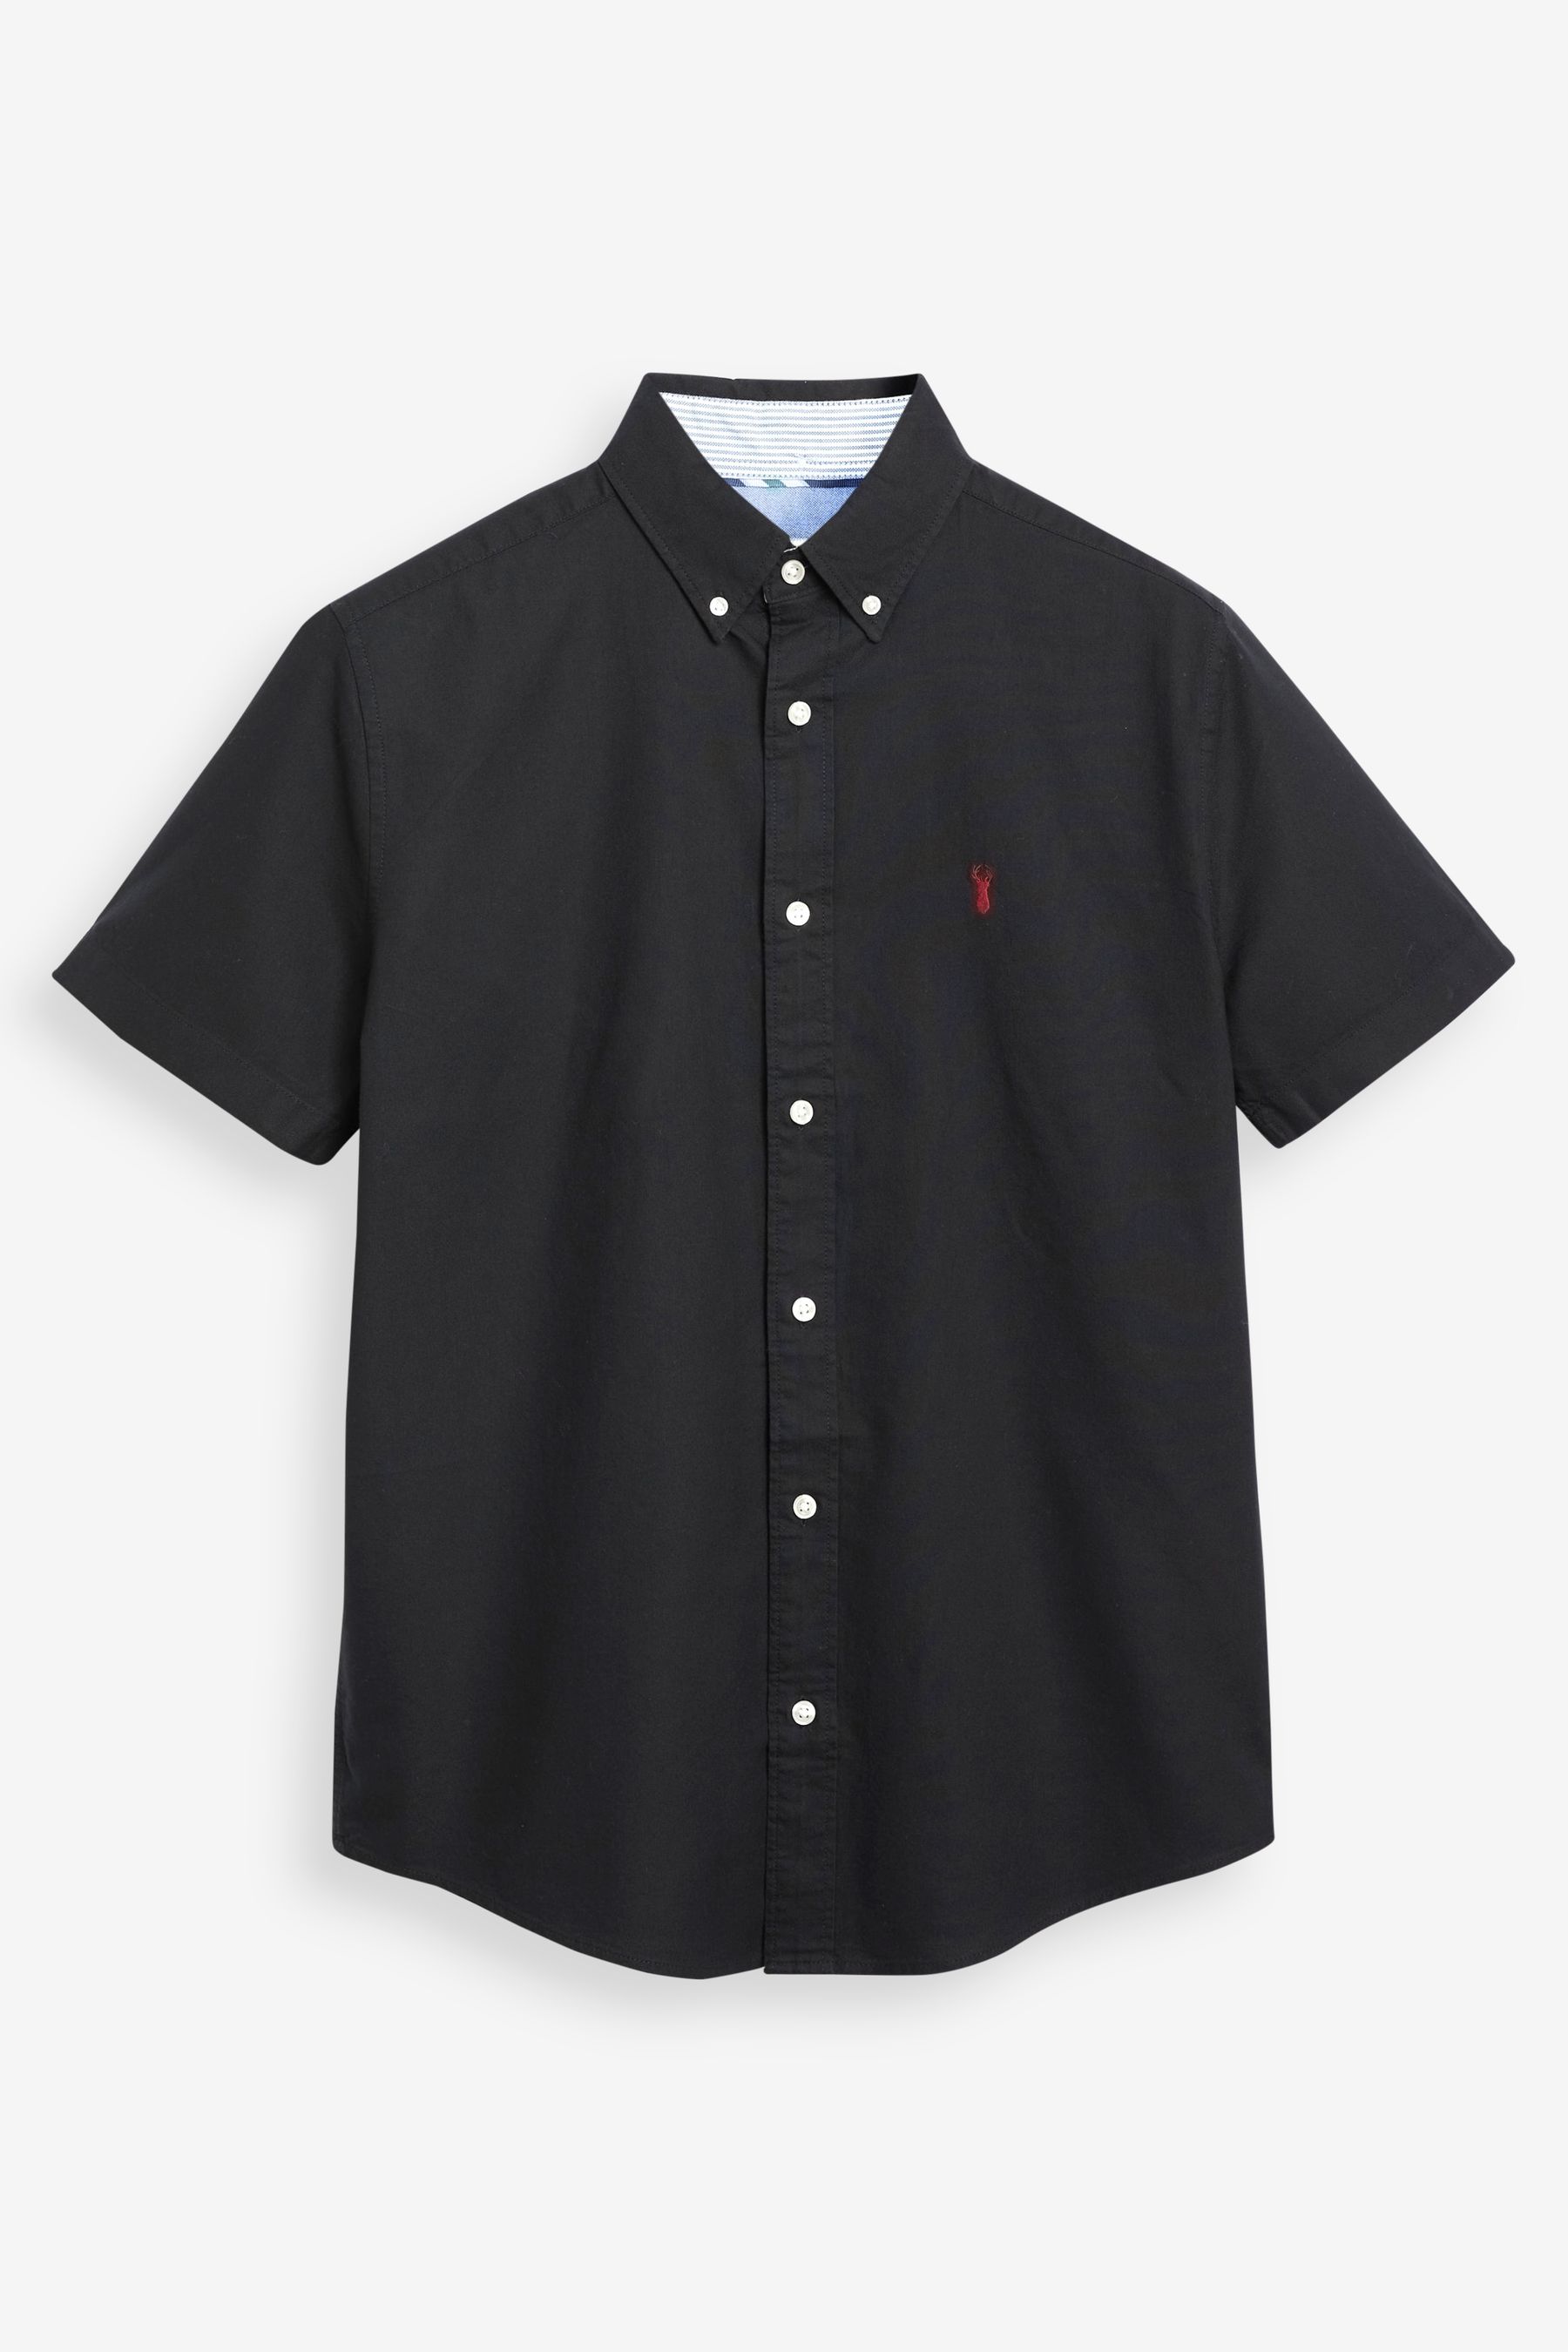 Buy Short Sleeve Oxford Shirt from Next Ireland